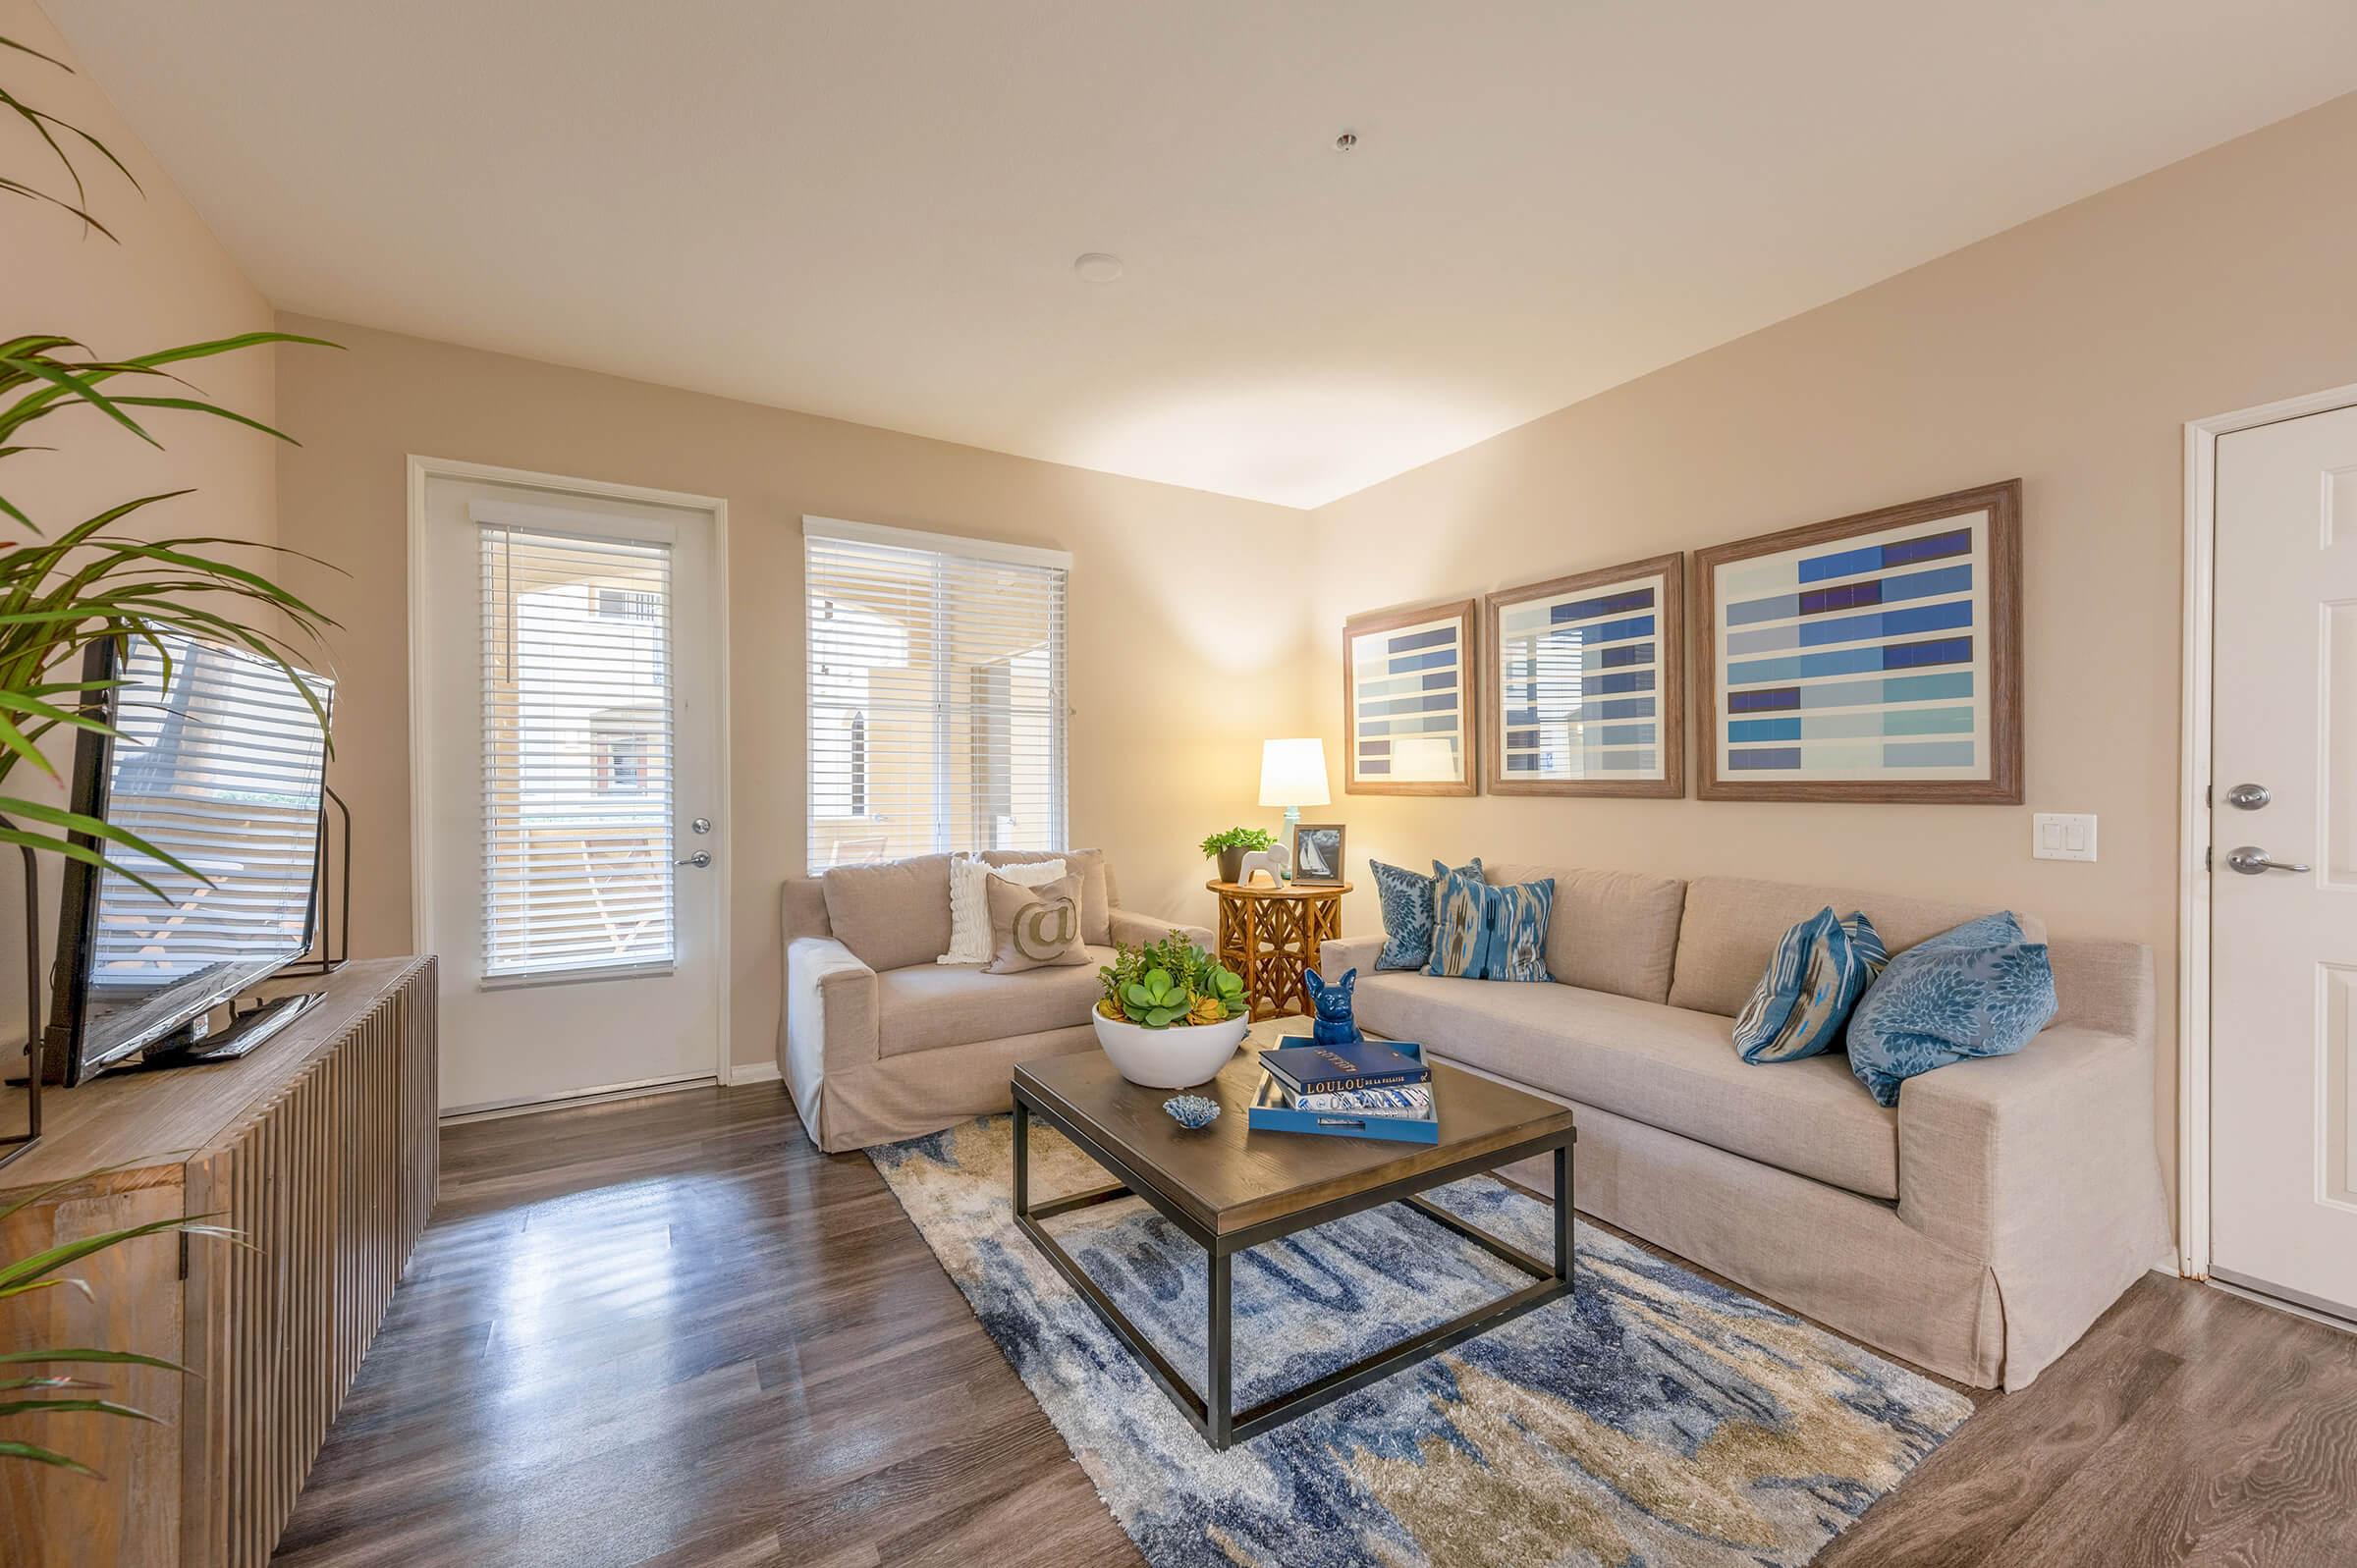 Laurel Terrace Apartment Homes provides hardwood style flooring